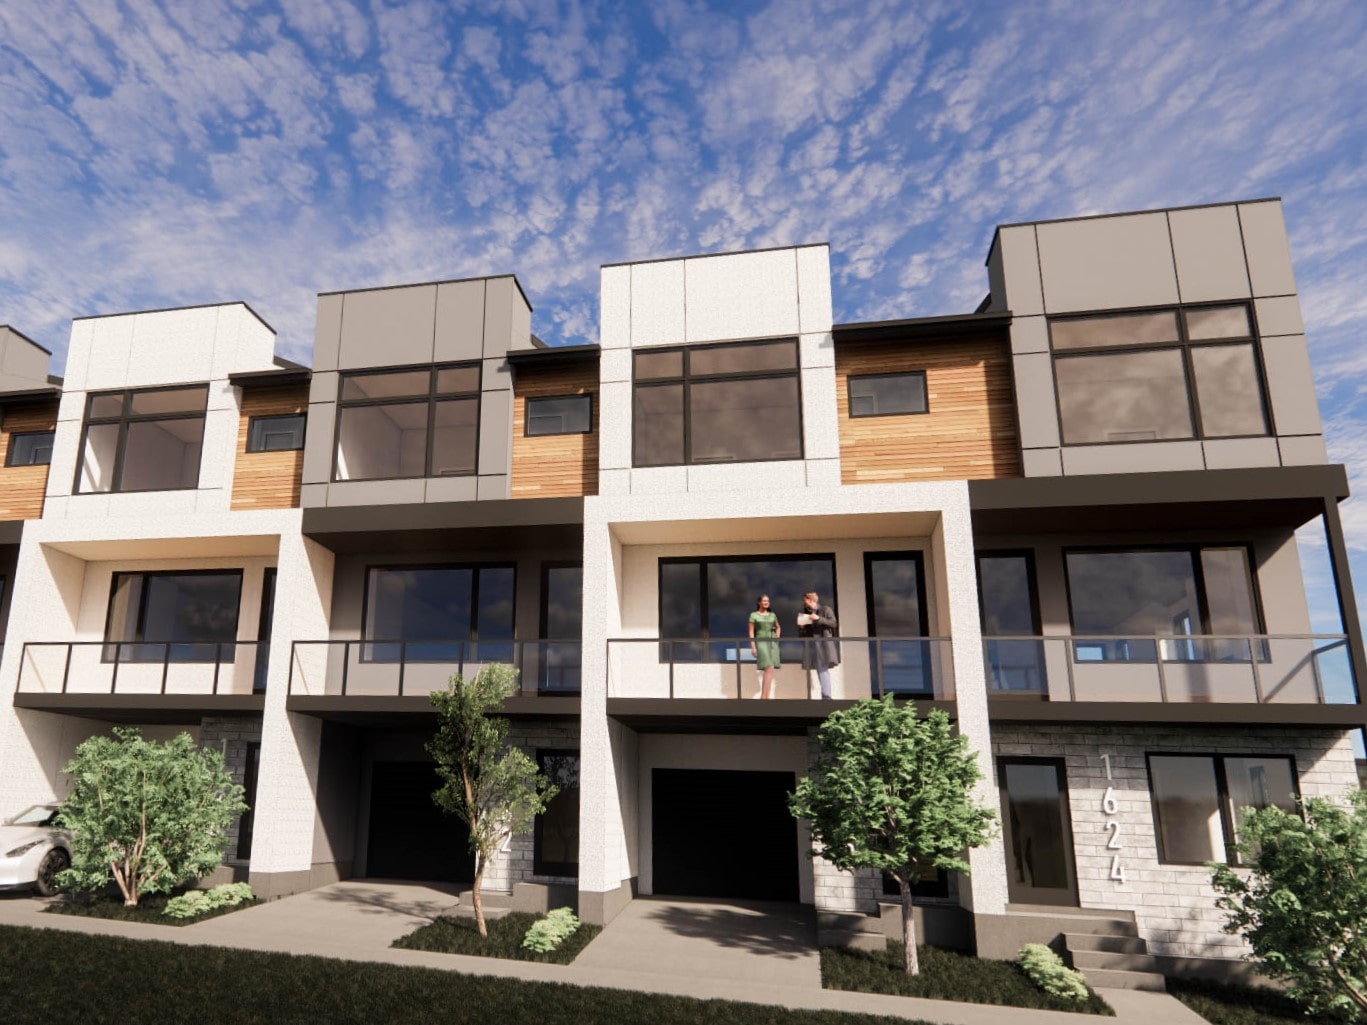 Homes depicting new housing bylaws in Calgary Alberta